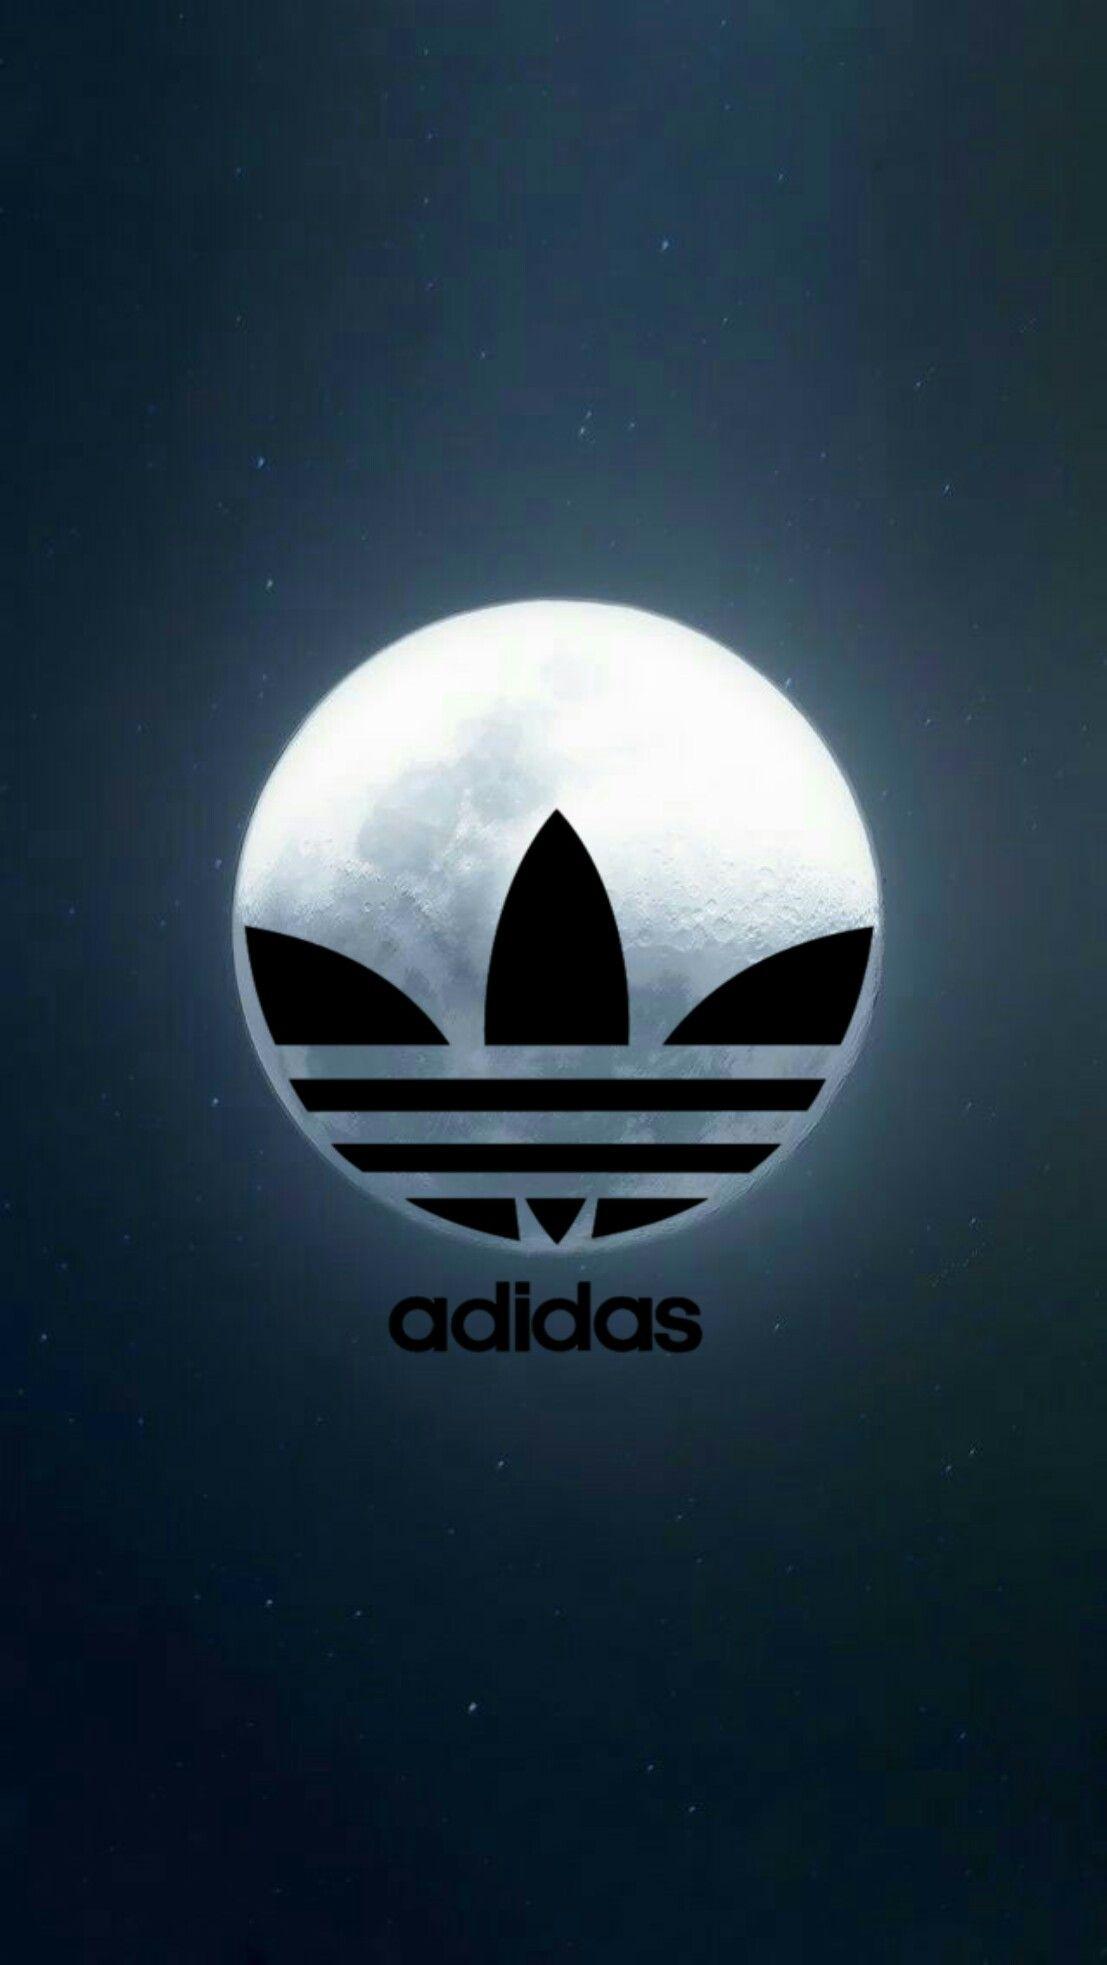 adidas #black #wallpaper #android #iphone. Adidas and Nike